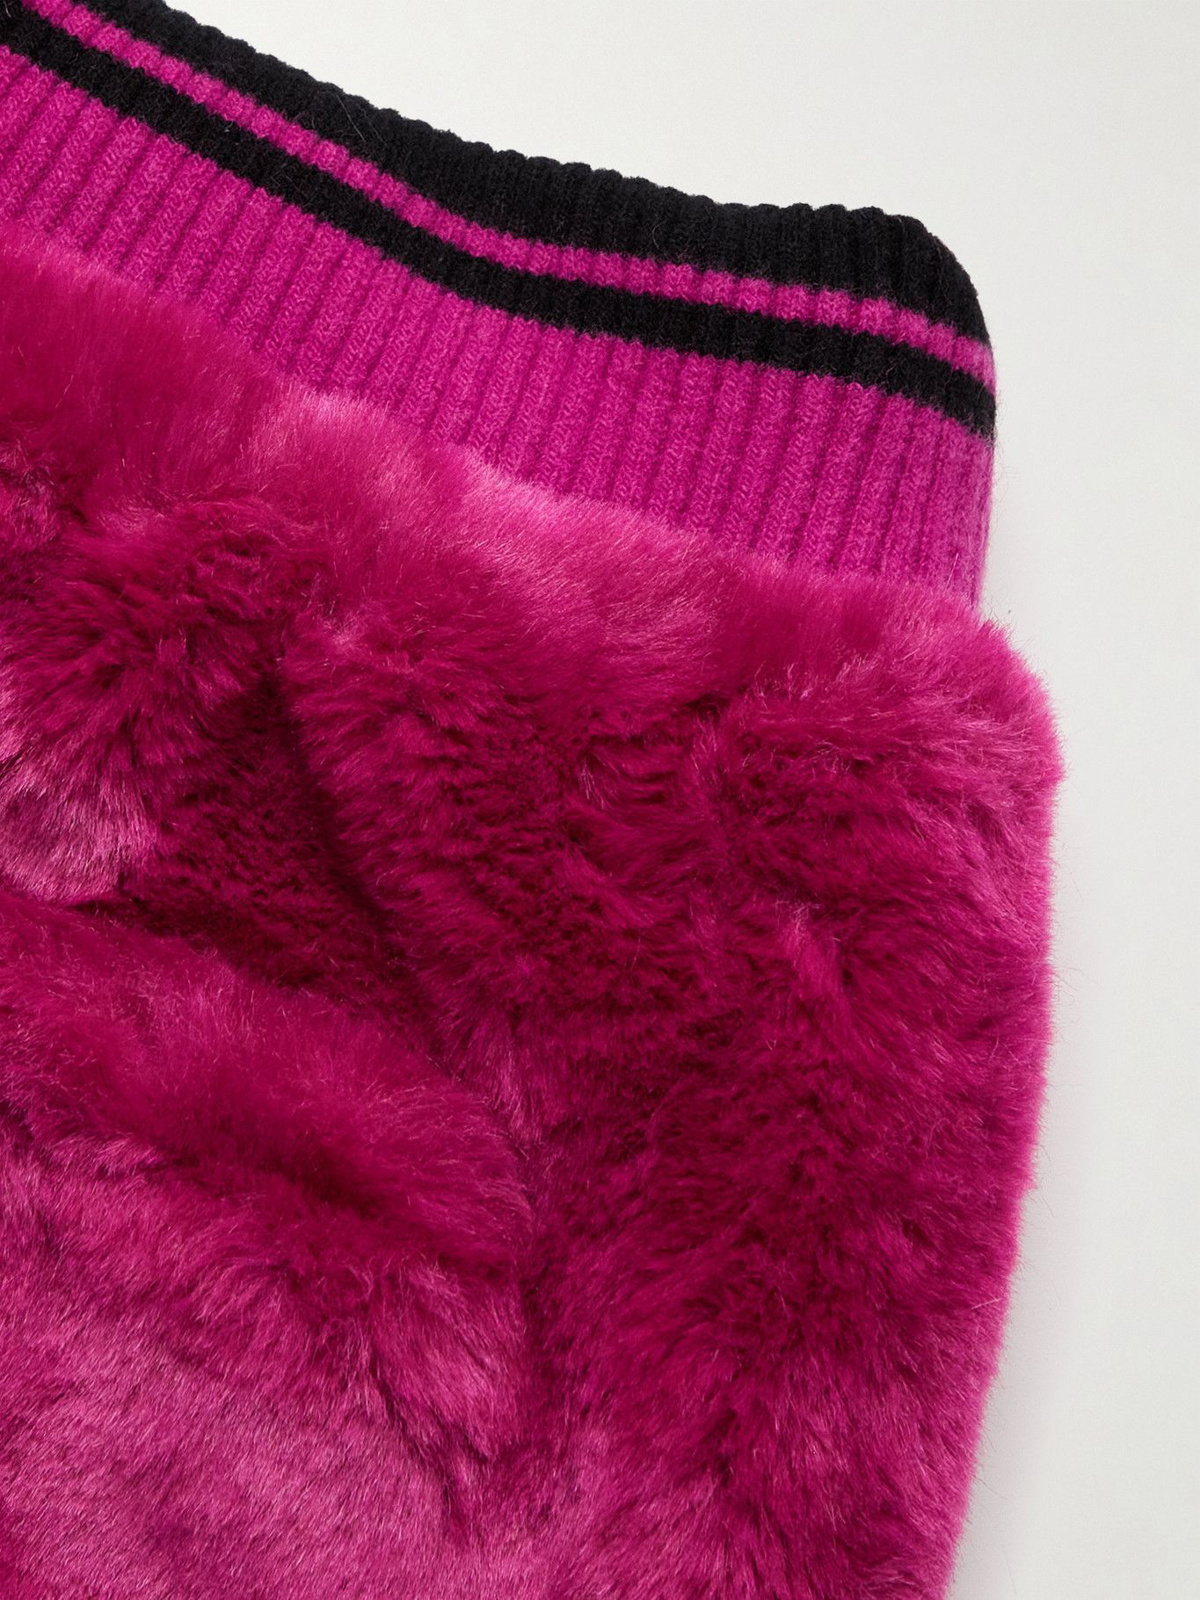 Dolce & Gabbana - Faux Fur Sweatpants - Pink Dolce & Gabbana